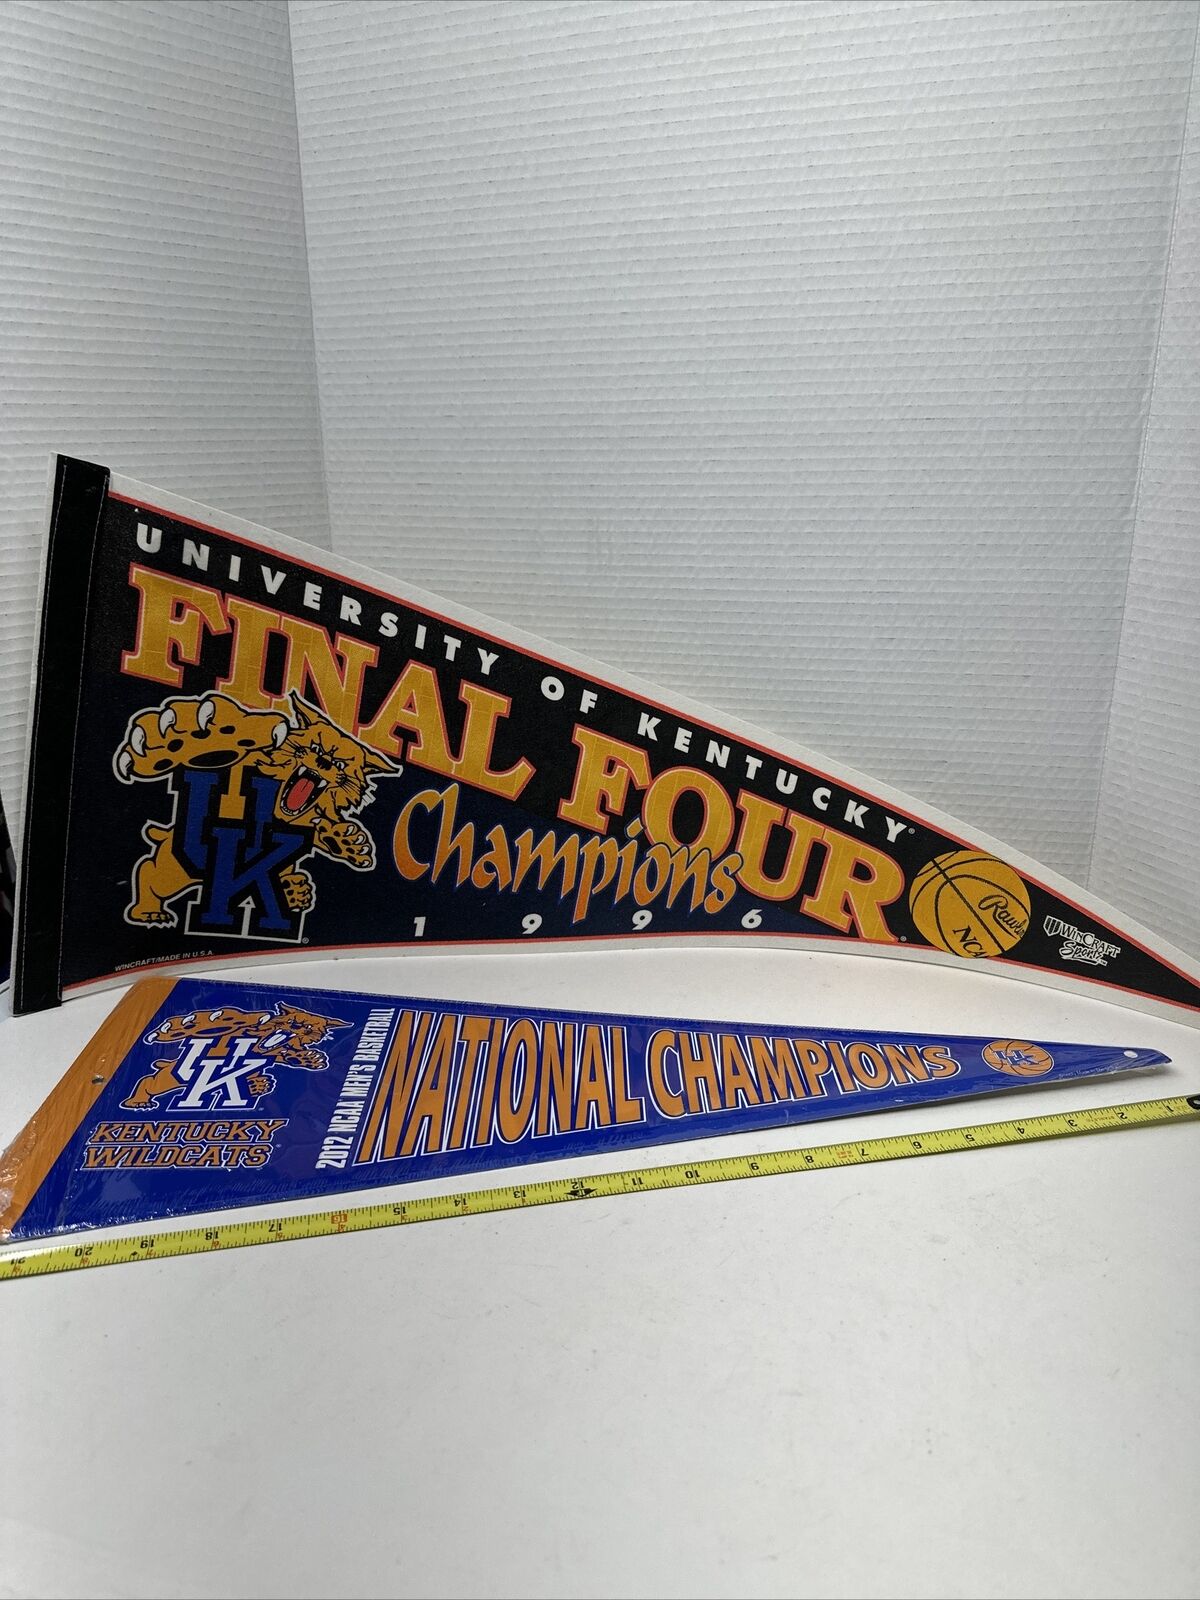 1996 University of Kentucky basketball champions pennant Lot Of 2